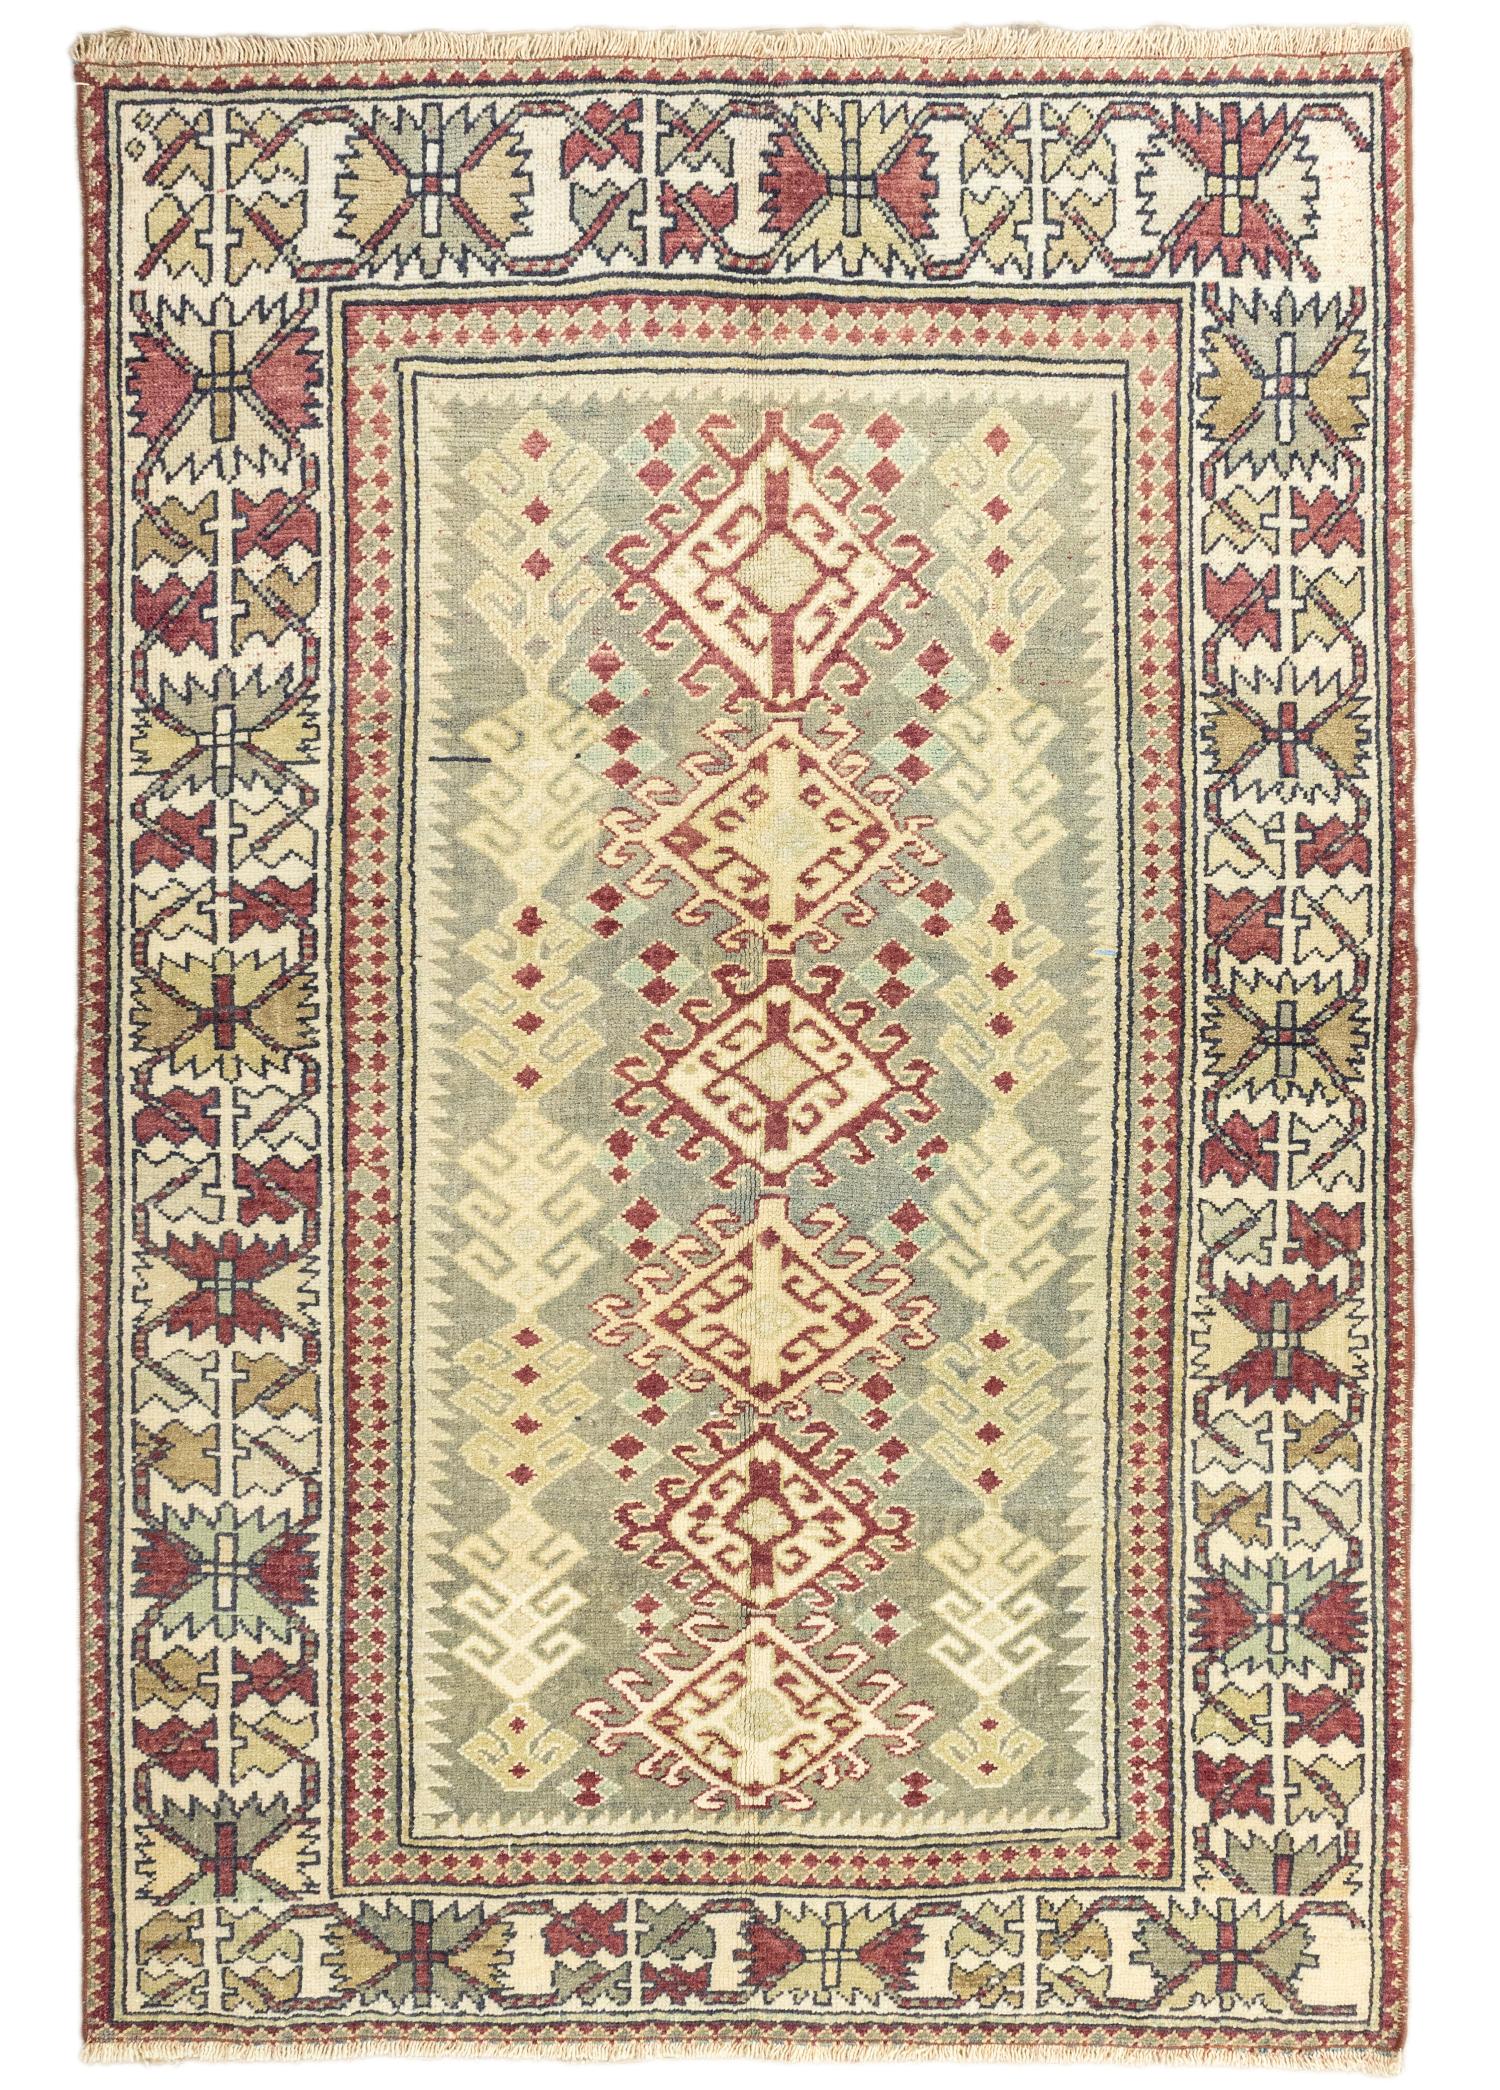 Vidar Primitive Patterned Hand-Woven Wool Rug 117x178 cm